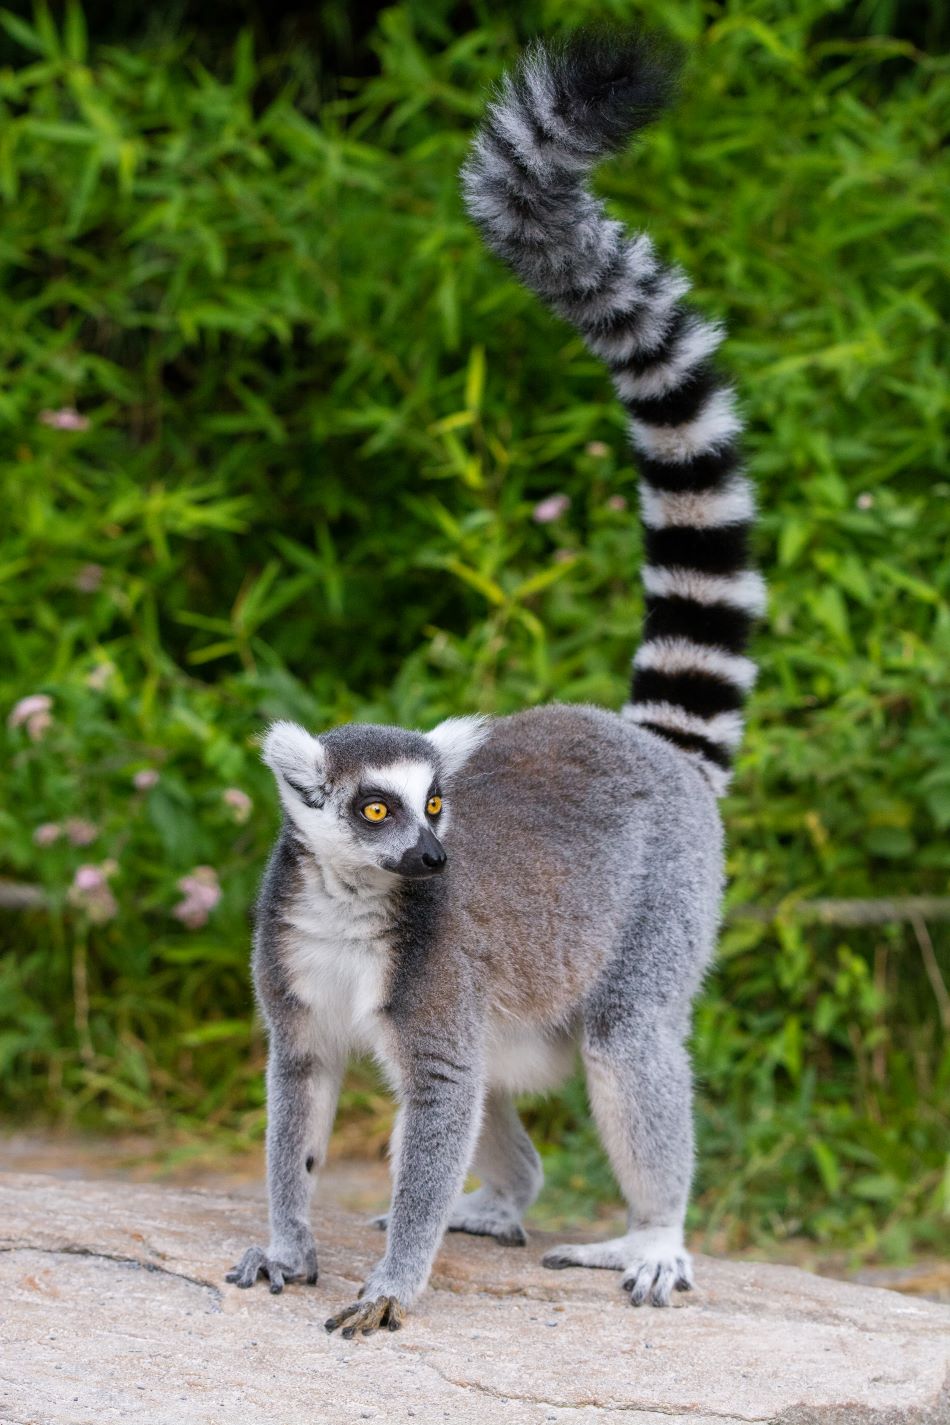 Lemur kata žije pouze na jihu Madagaskaru, foto Mathias Appel/CC0, https://commons.wikimedia.org/wiki/File:Lemur_(36254433134).jpg, https://creativecommons.org/publicdomain/zero/1.0/deed.en.